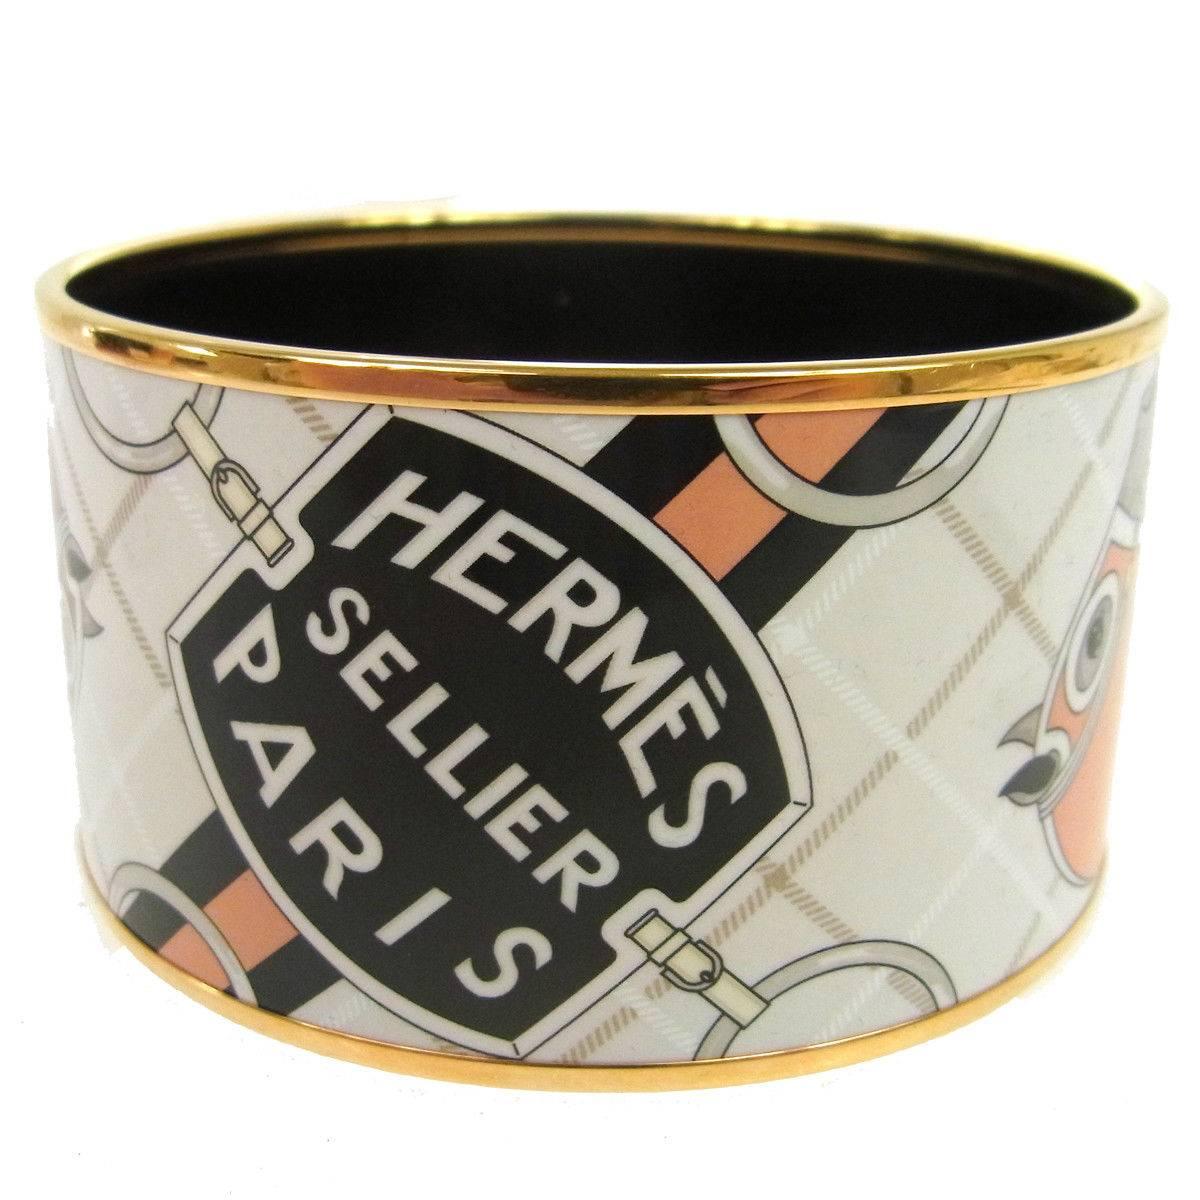 Hermes Sellier Horse Motif Paris Wide Gold Evening Cuff Bracelet in Box

Metal
Enamel
Gold tone 
Date code present 
Made in France
Width 1.5